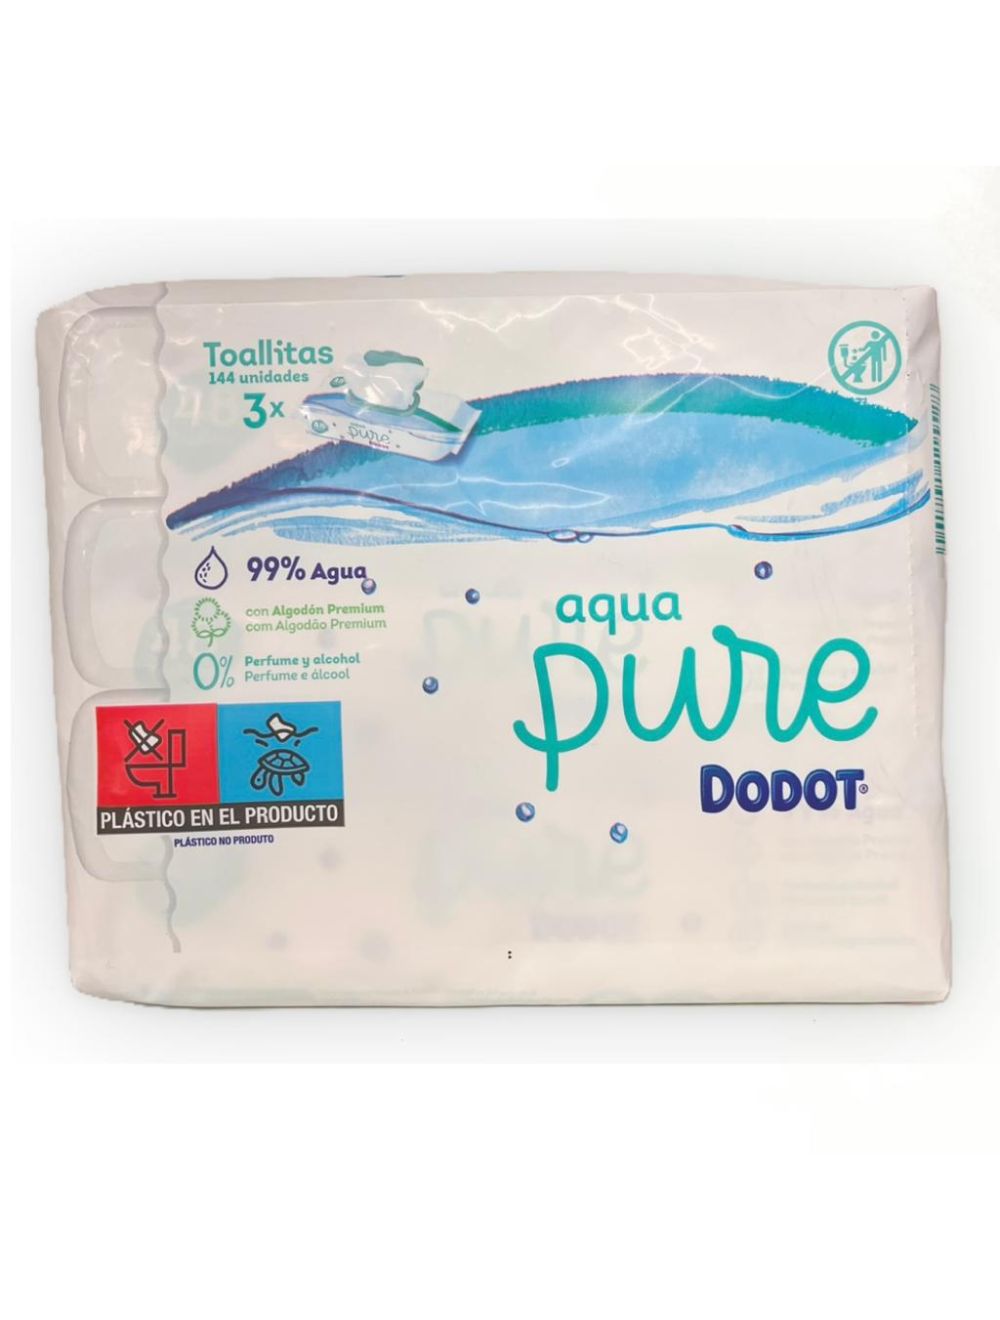 Dodot Aqua Pure Toallitas, 3 paquetes - 144 toallitas - INCI Beauty